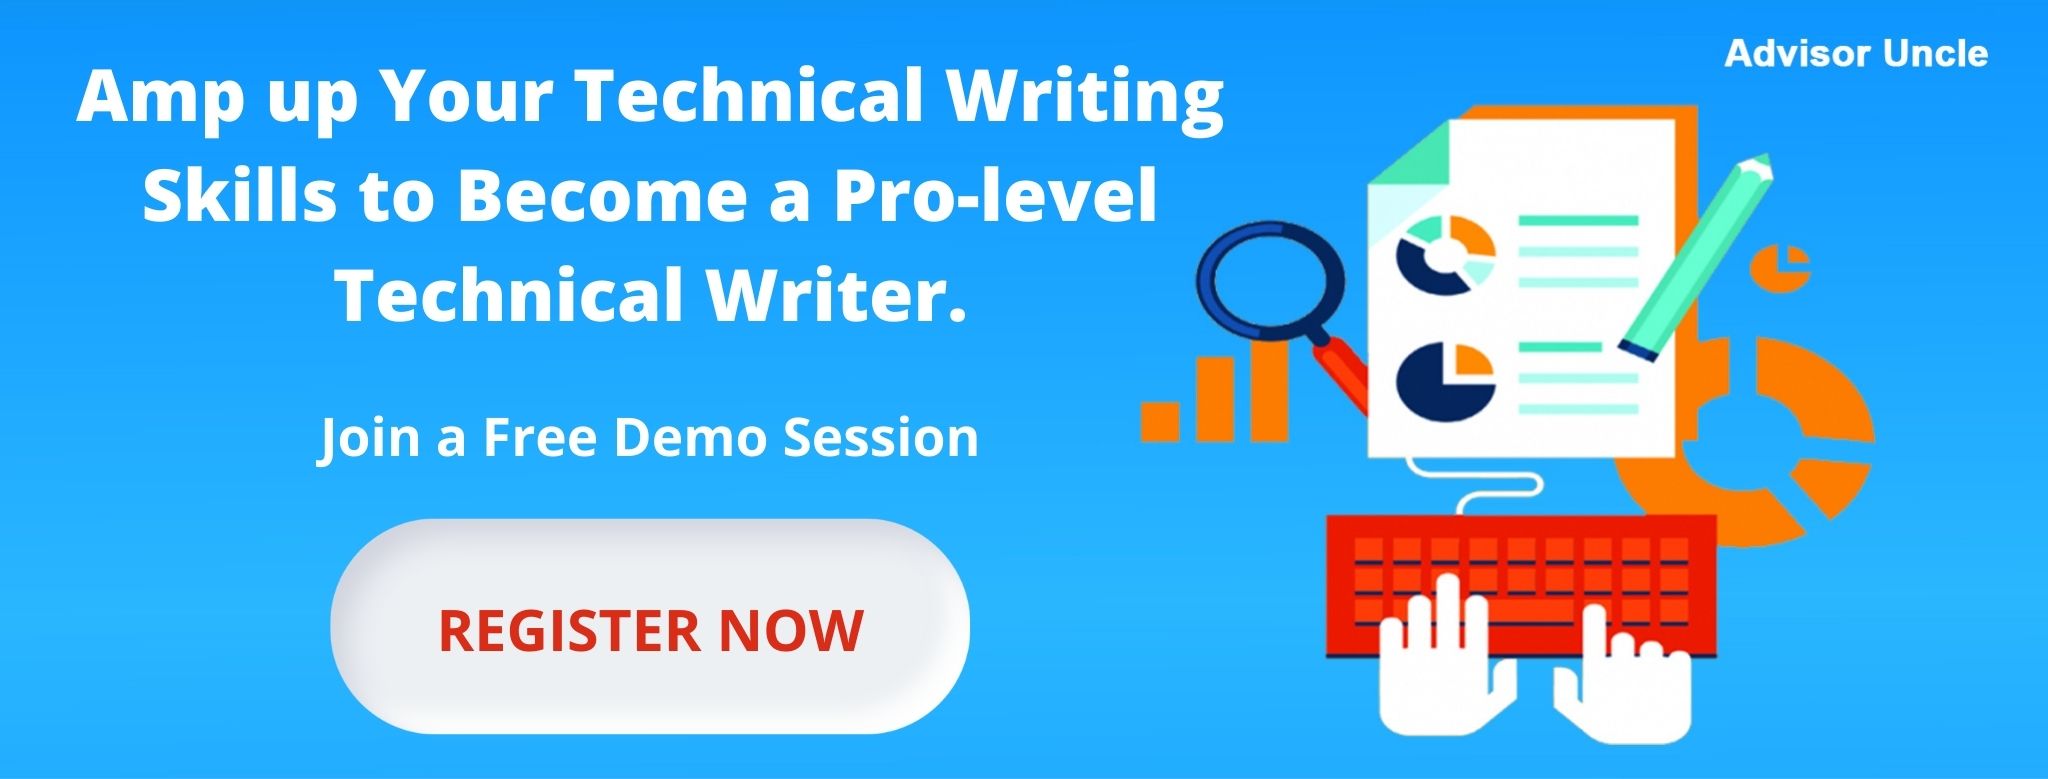 IIM Skills Technical writing Course free demo invite